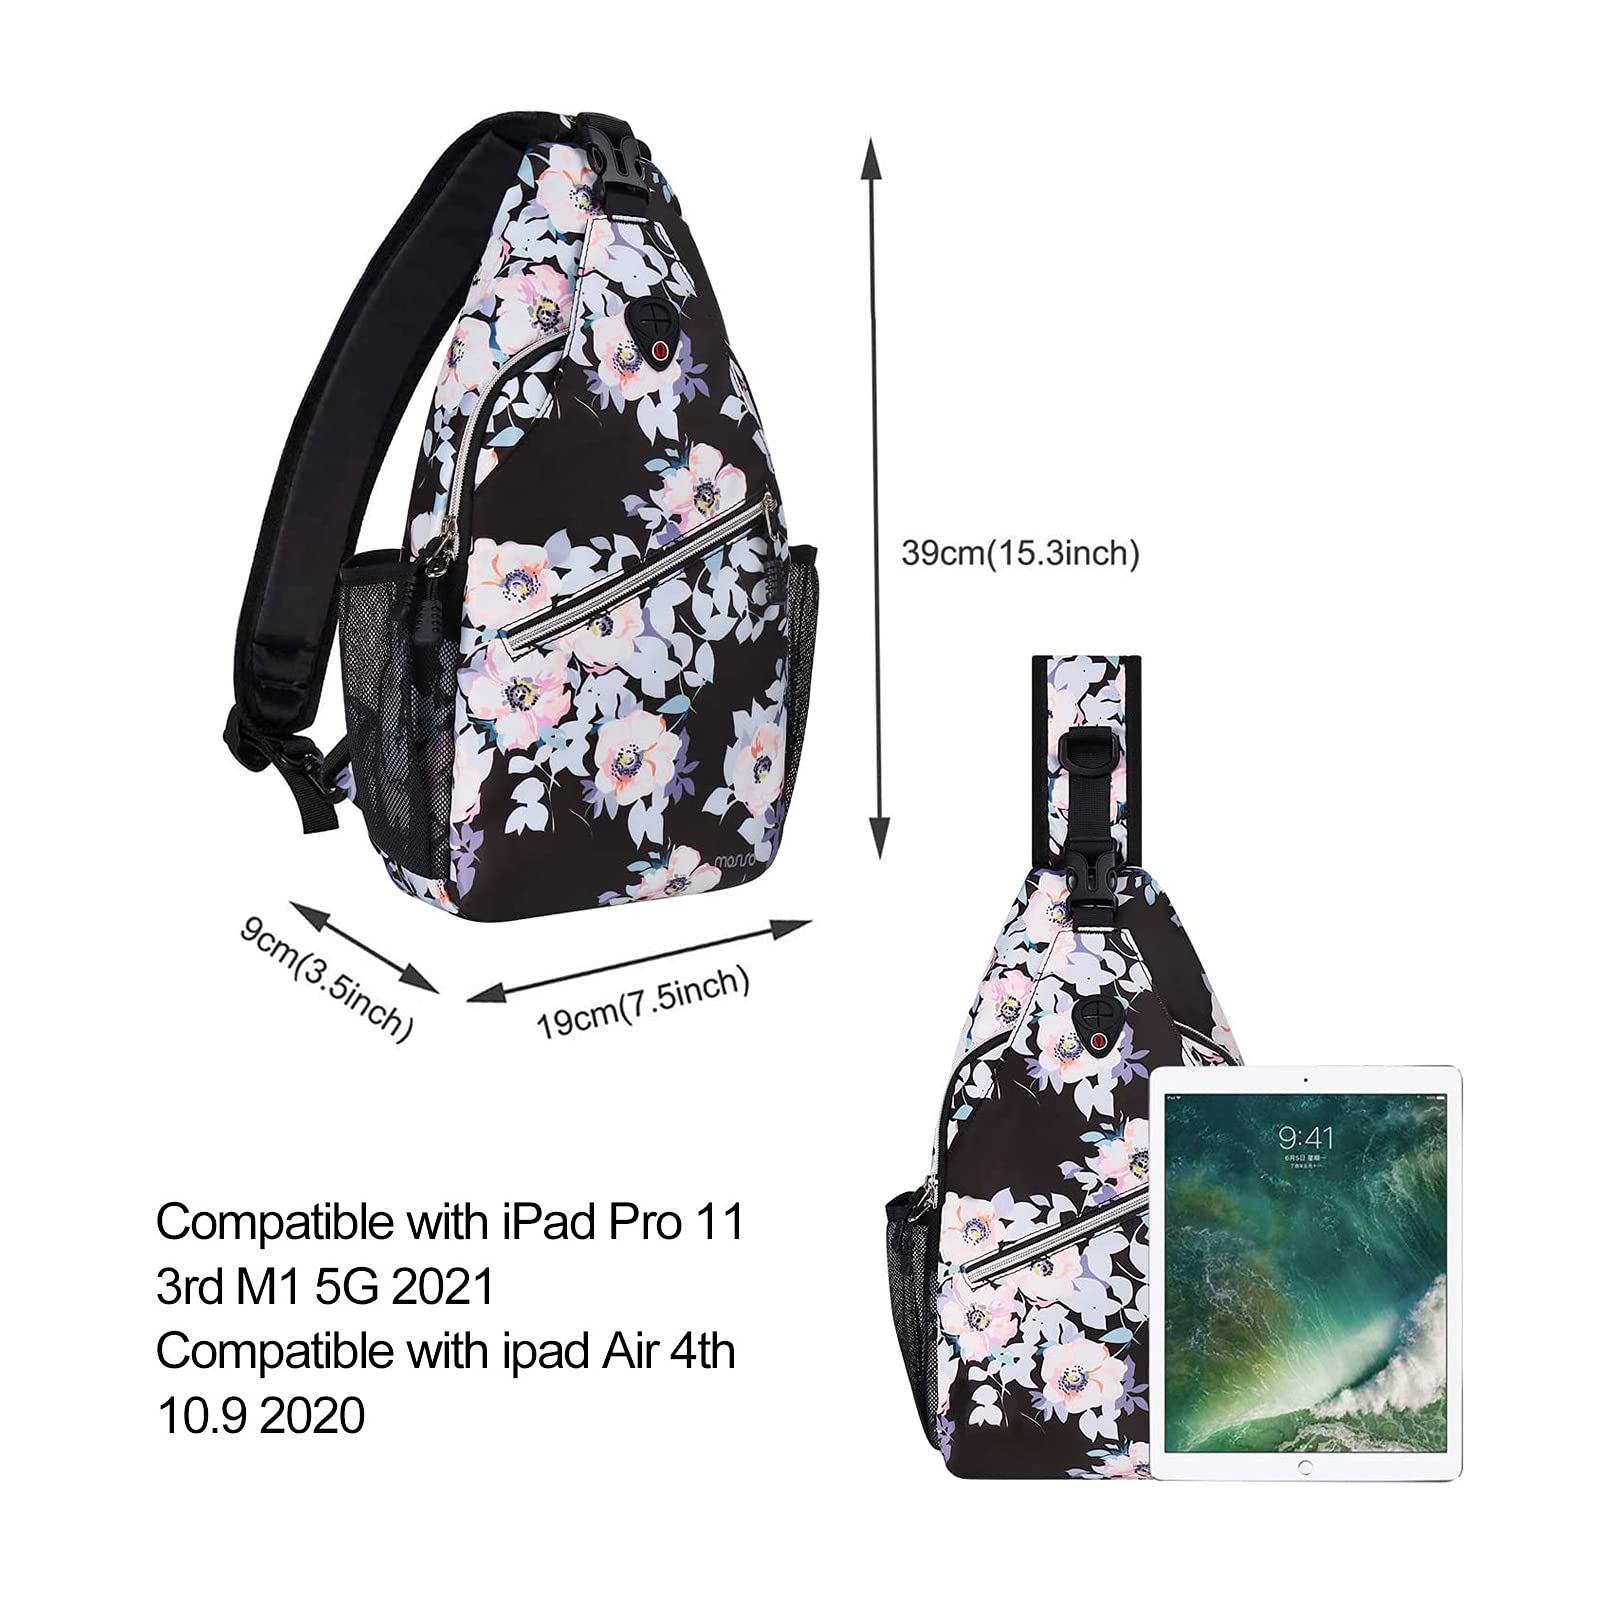 MOSISO Sling Backpack,Travel Hiking Daypack Pattern Rope Crossbody Shoulder Bag, Black Base Peachbloom